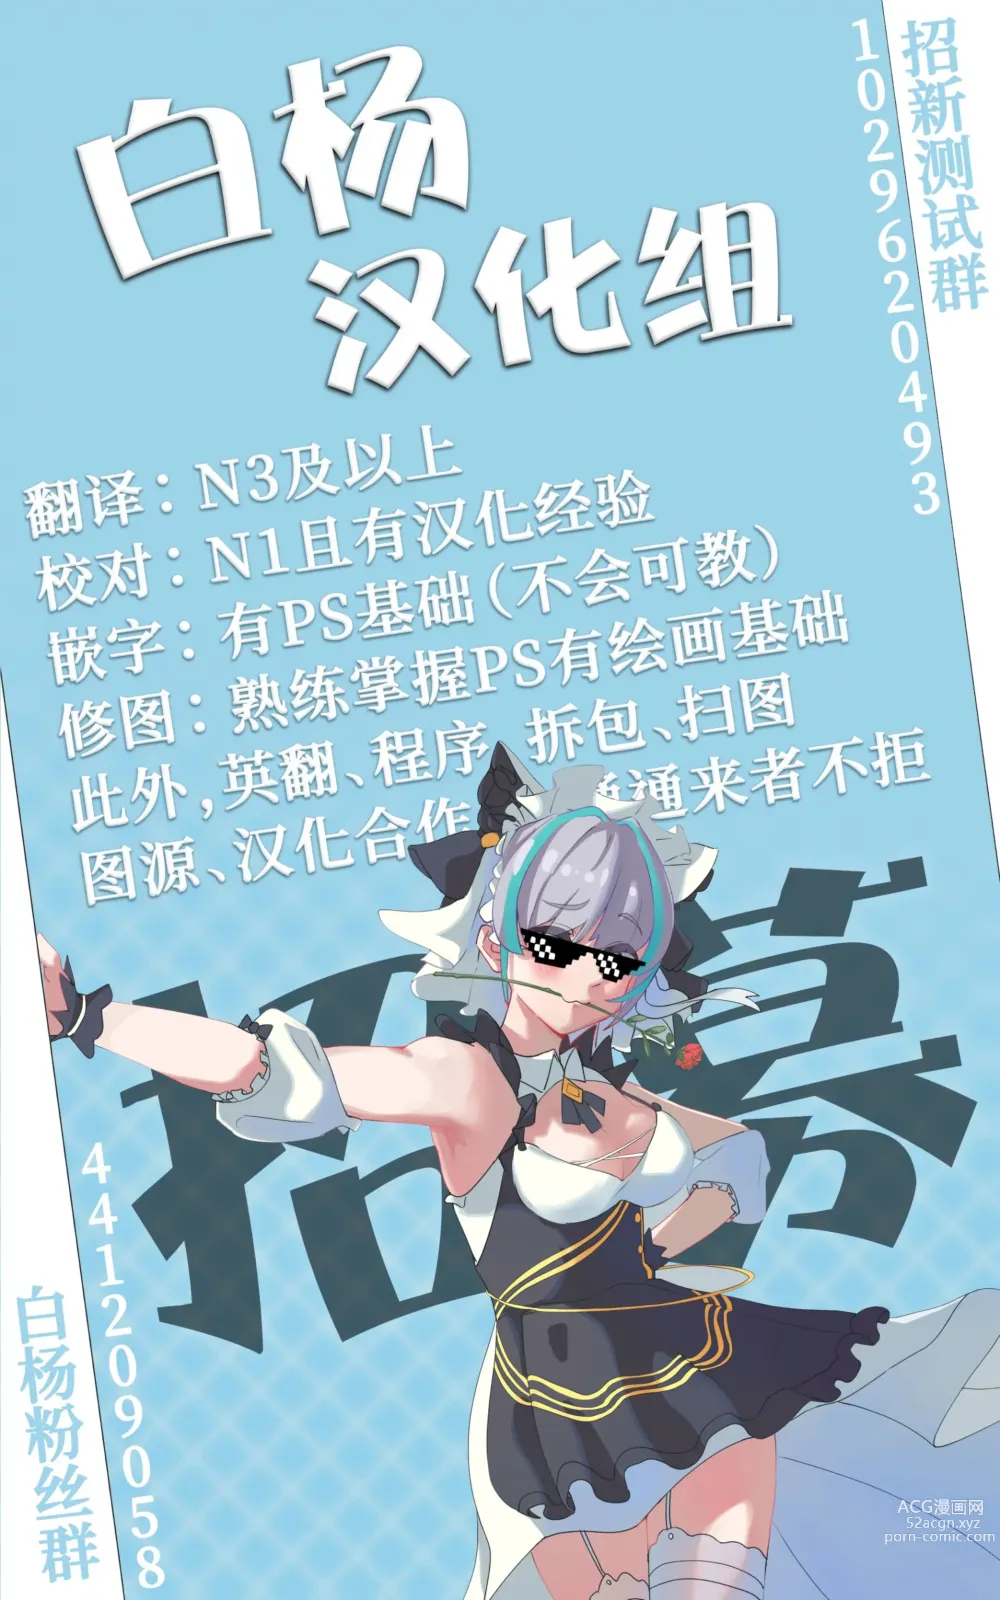 Page 26 of doujinshi 关于K杯长乳COSER不断的绕圈子用小号诱惑我所以我就把她叫出来狠狠地XXX了的事情